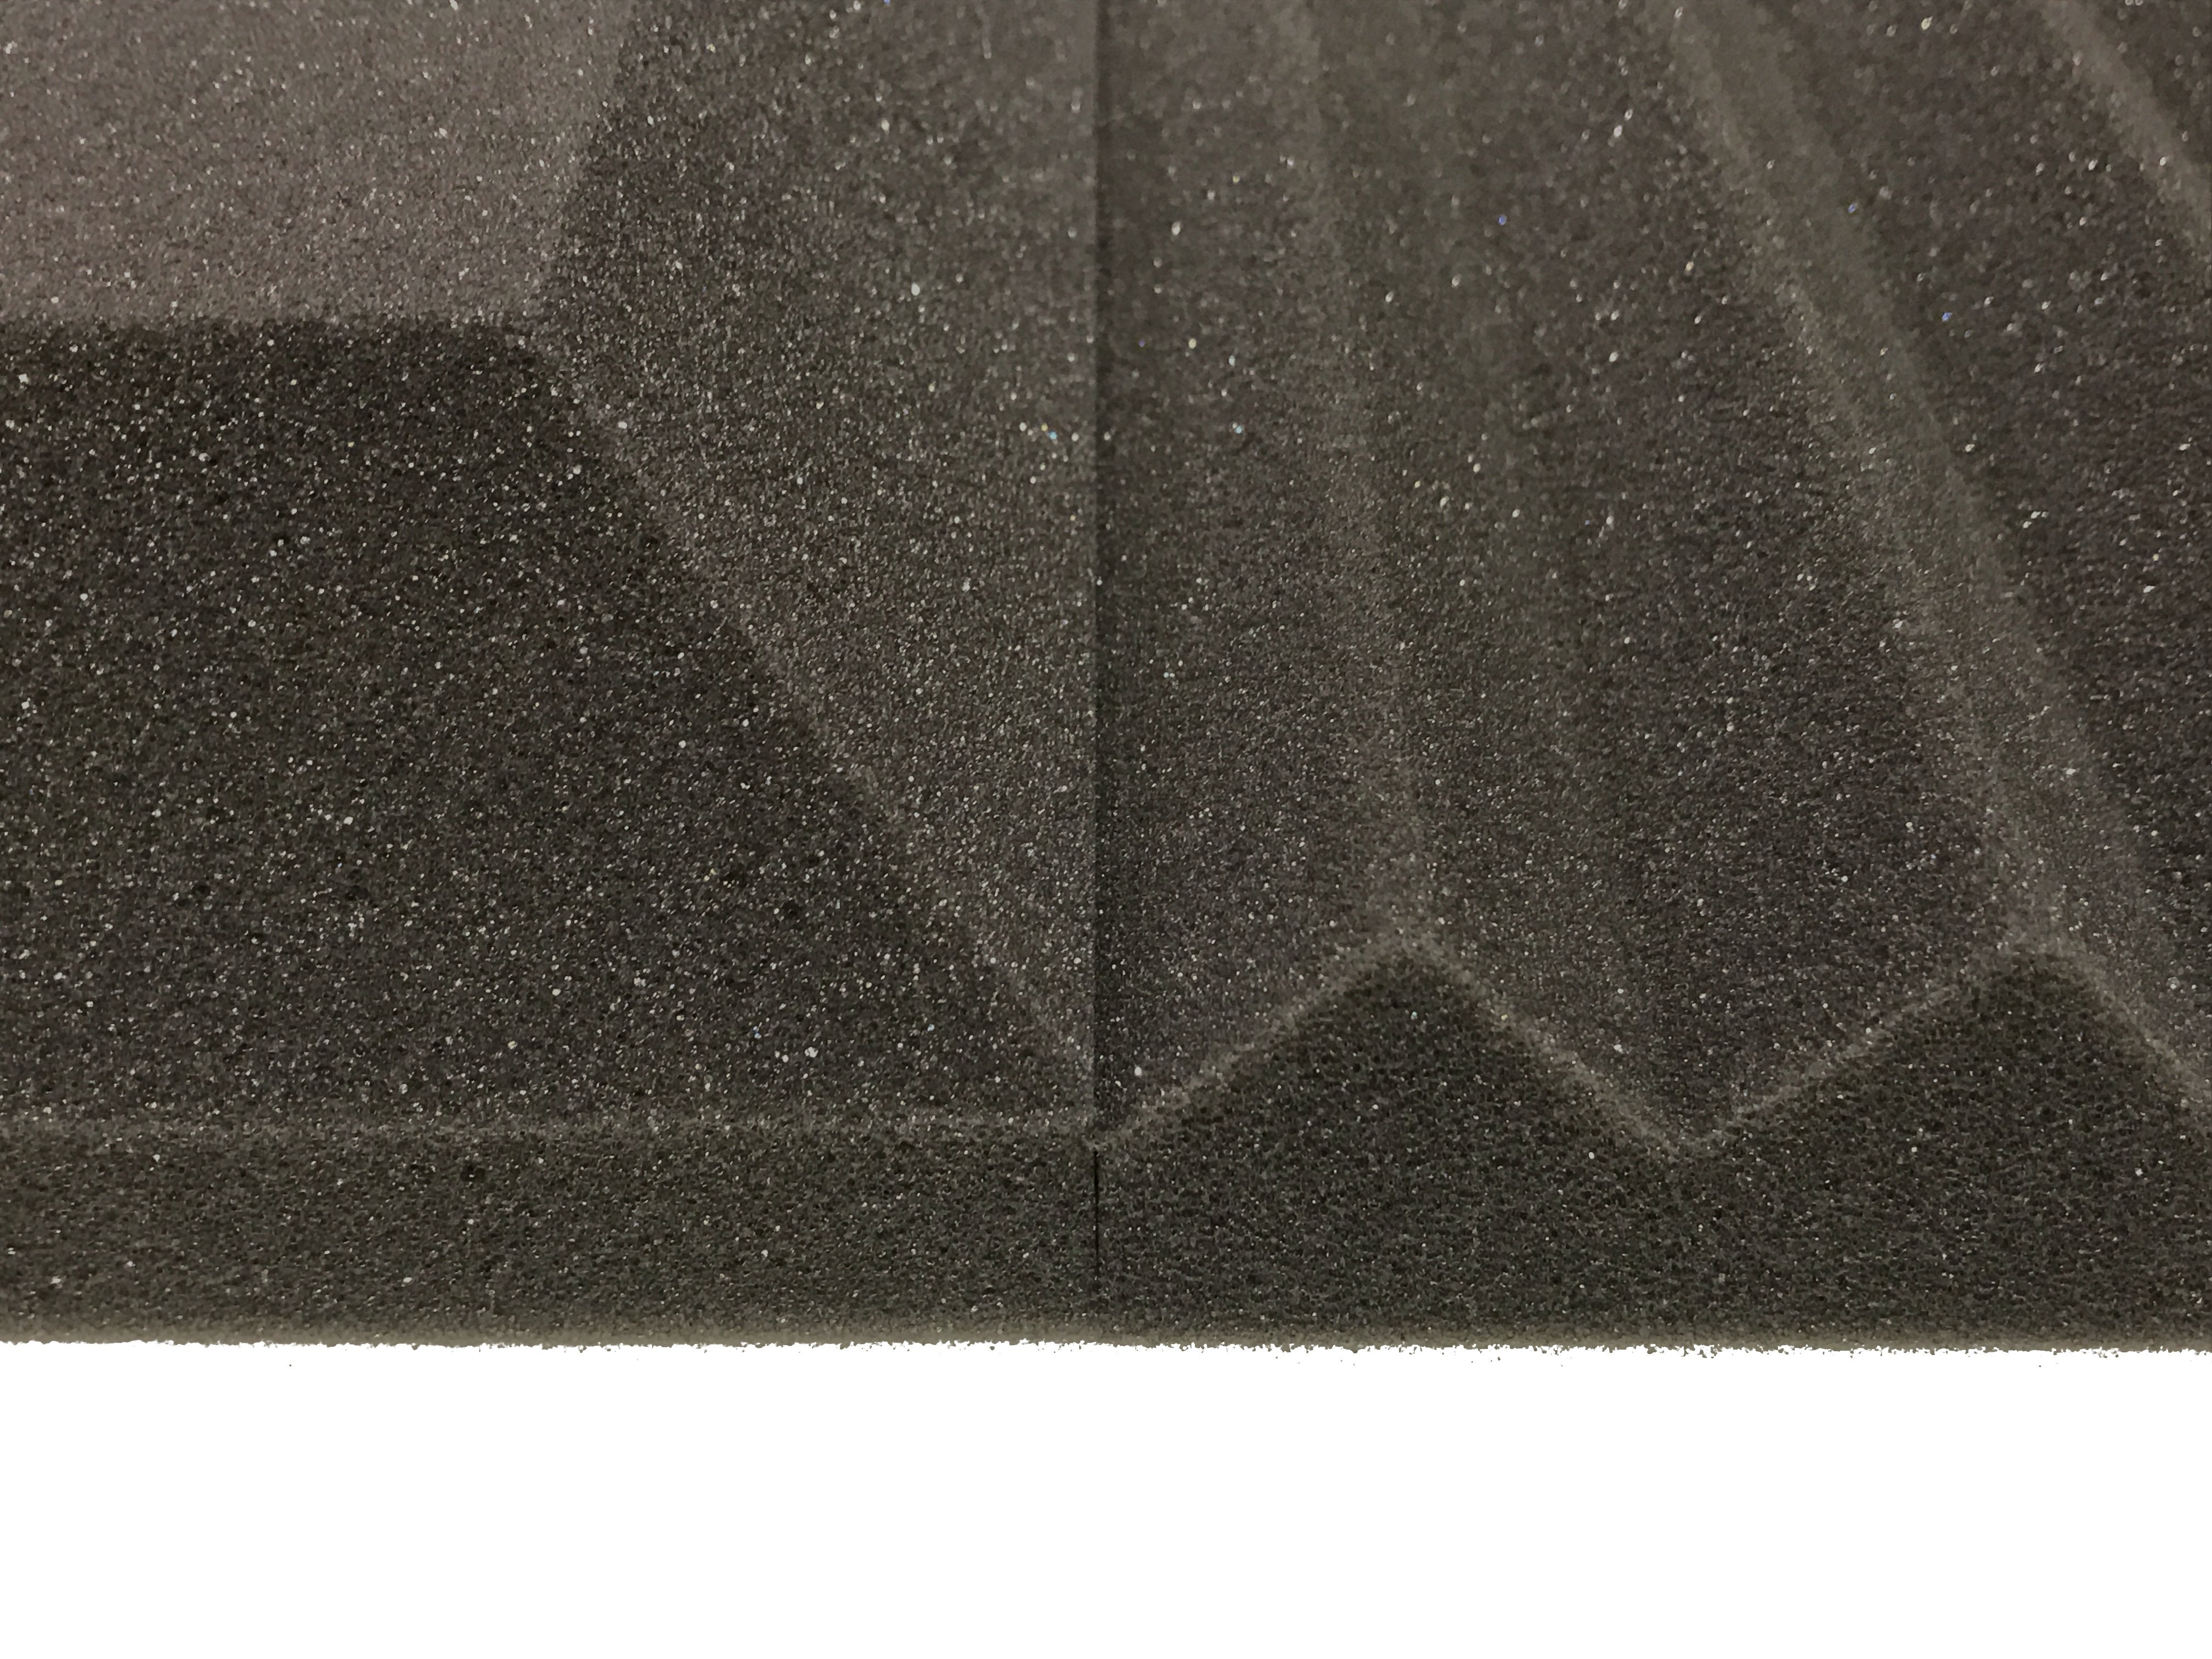 Euphonic Wedge Standard 12" Acoustic Studio Foam Tile Pack - Advanced Acoustics